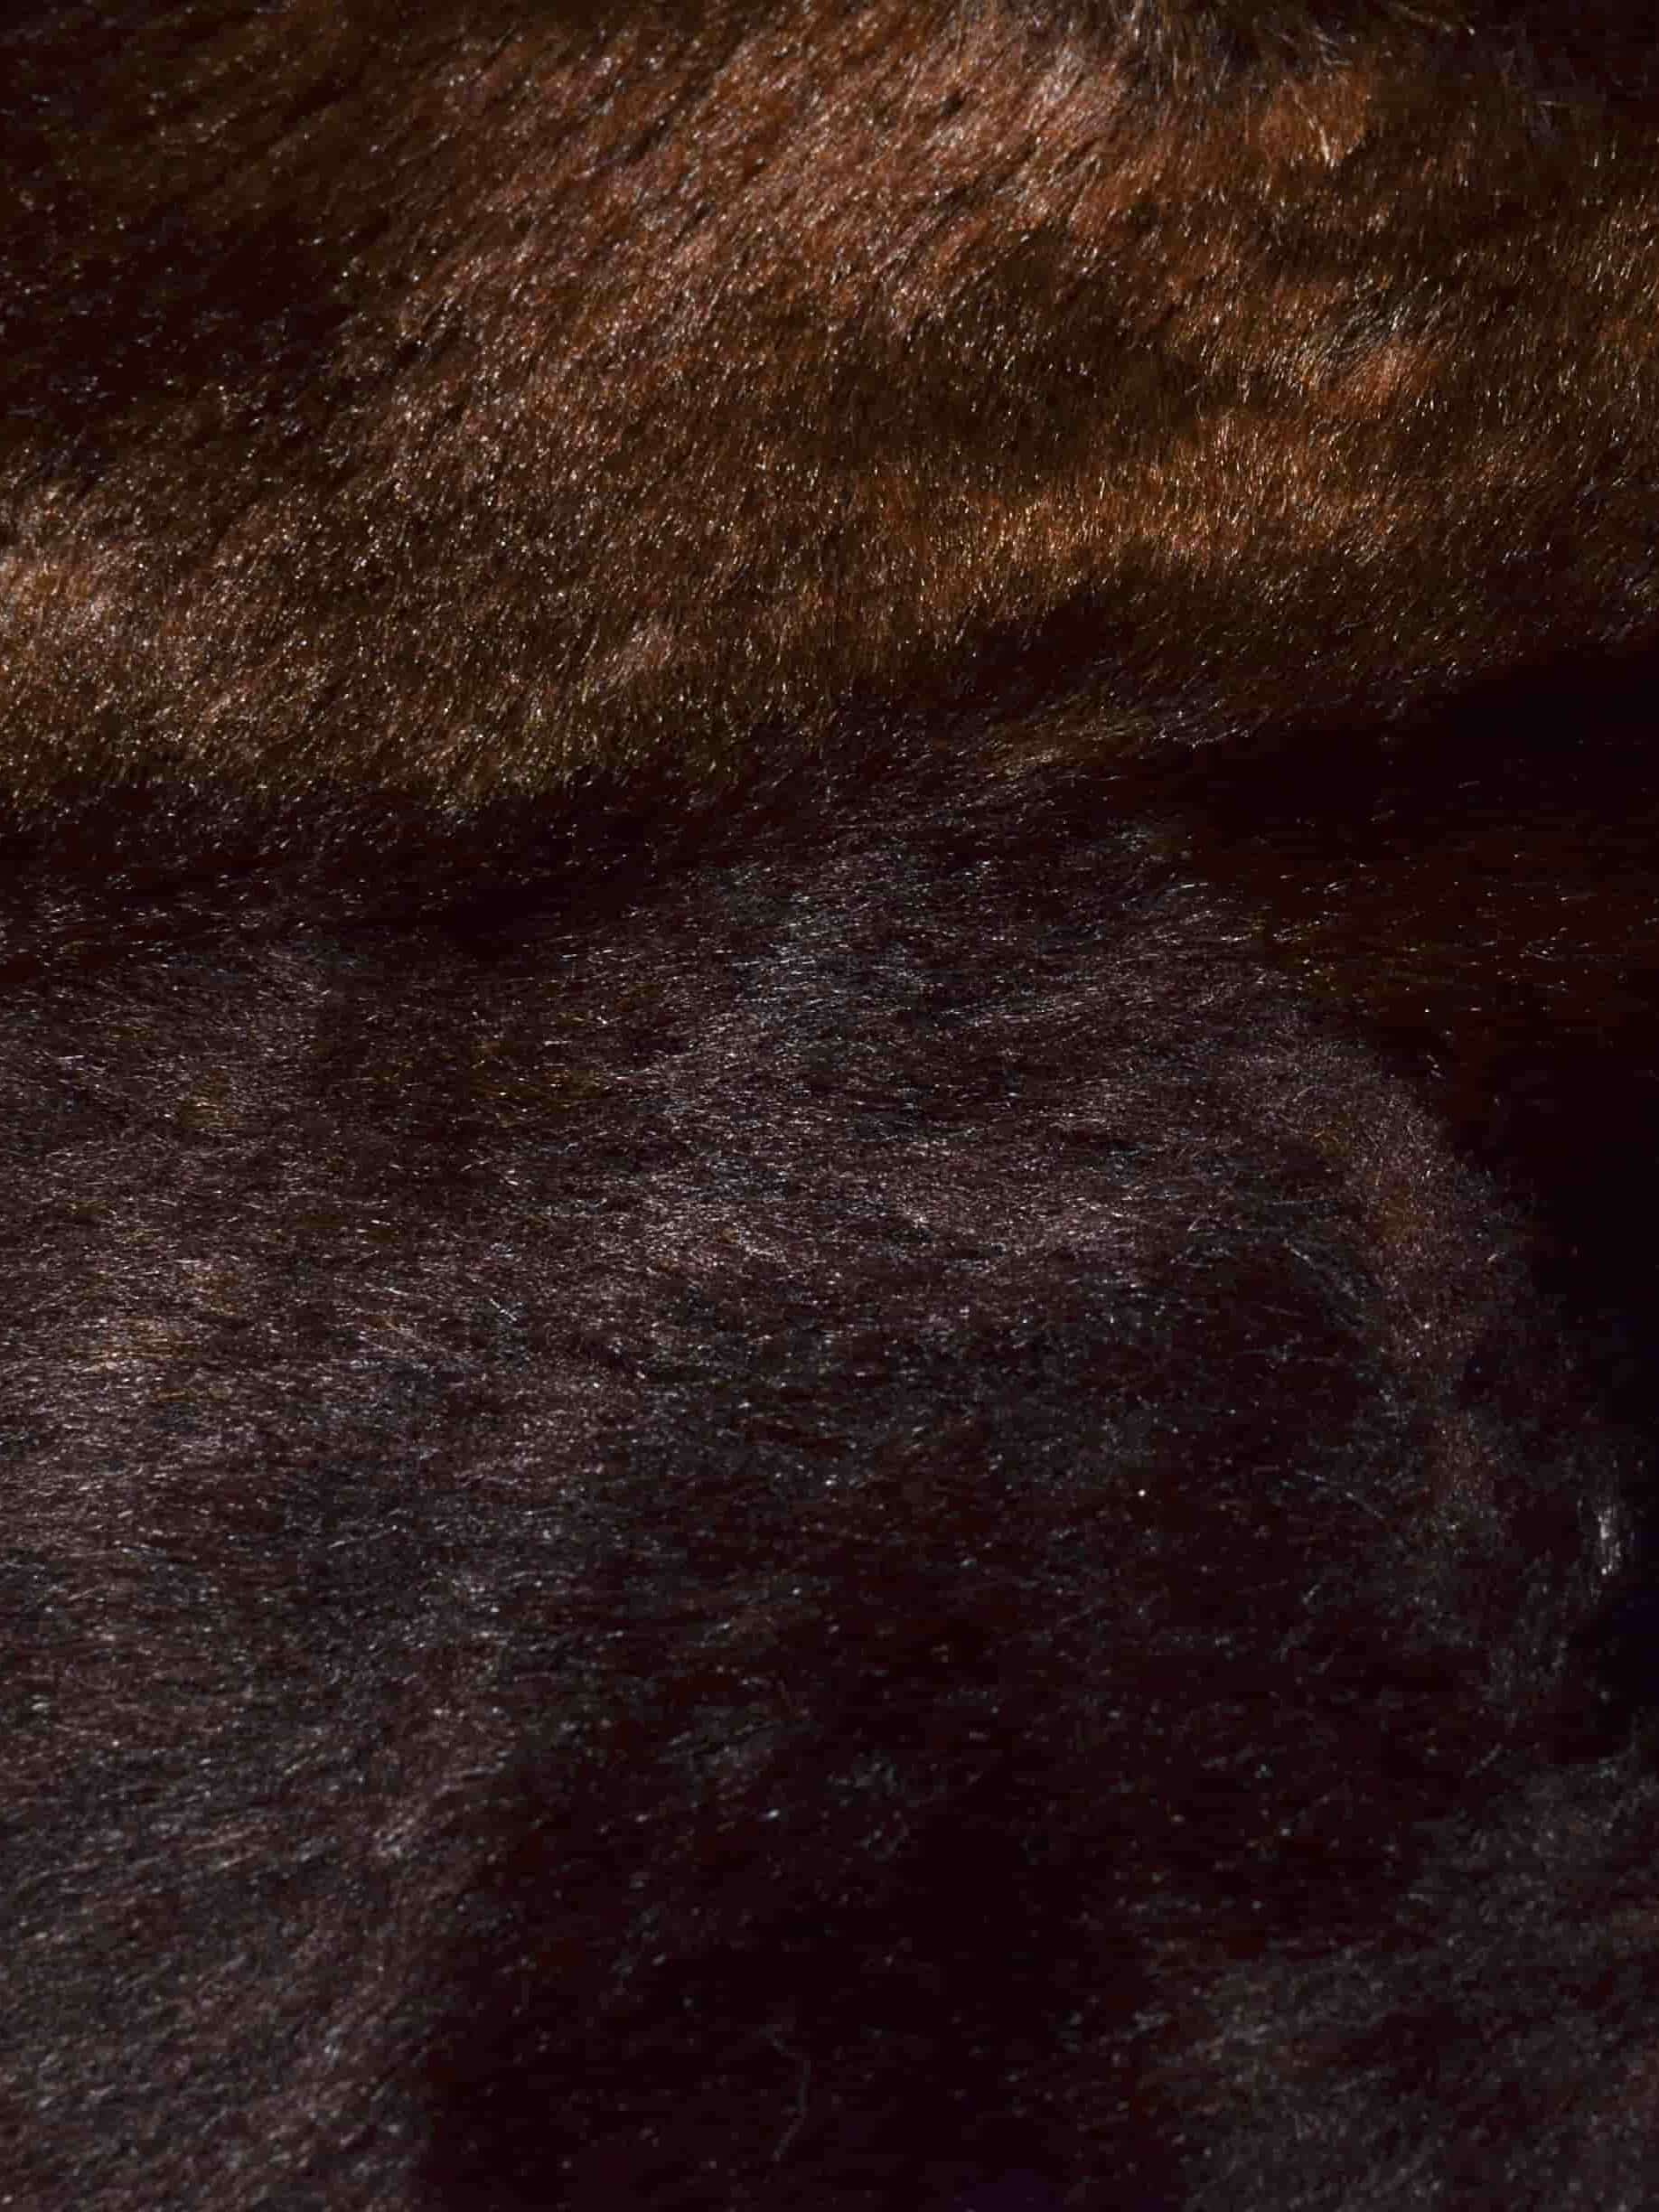 brown animal fur